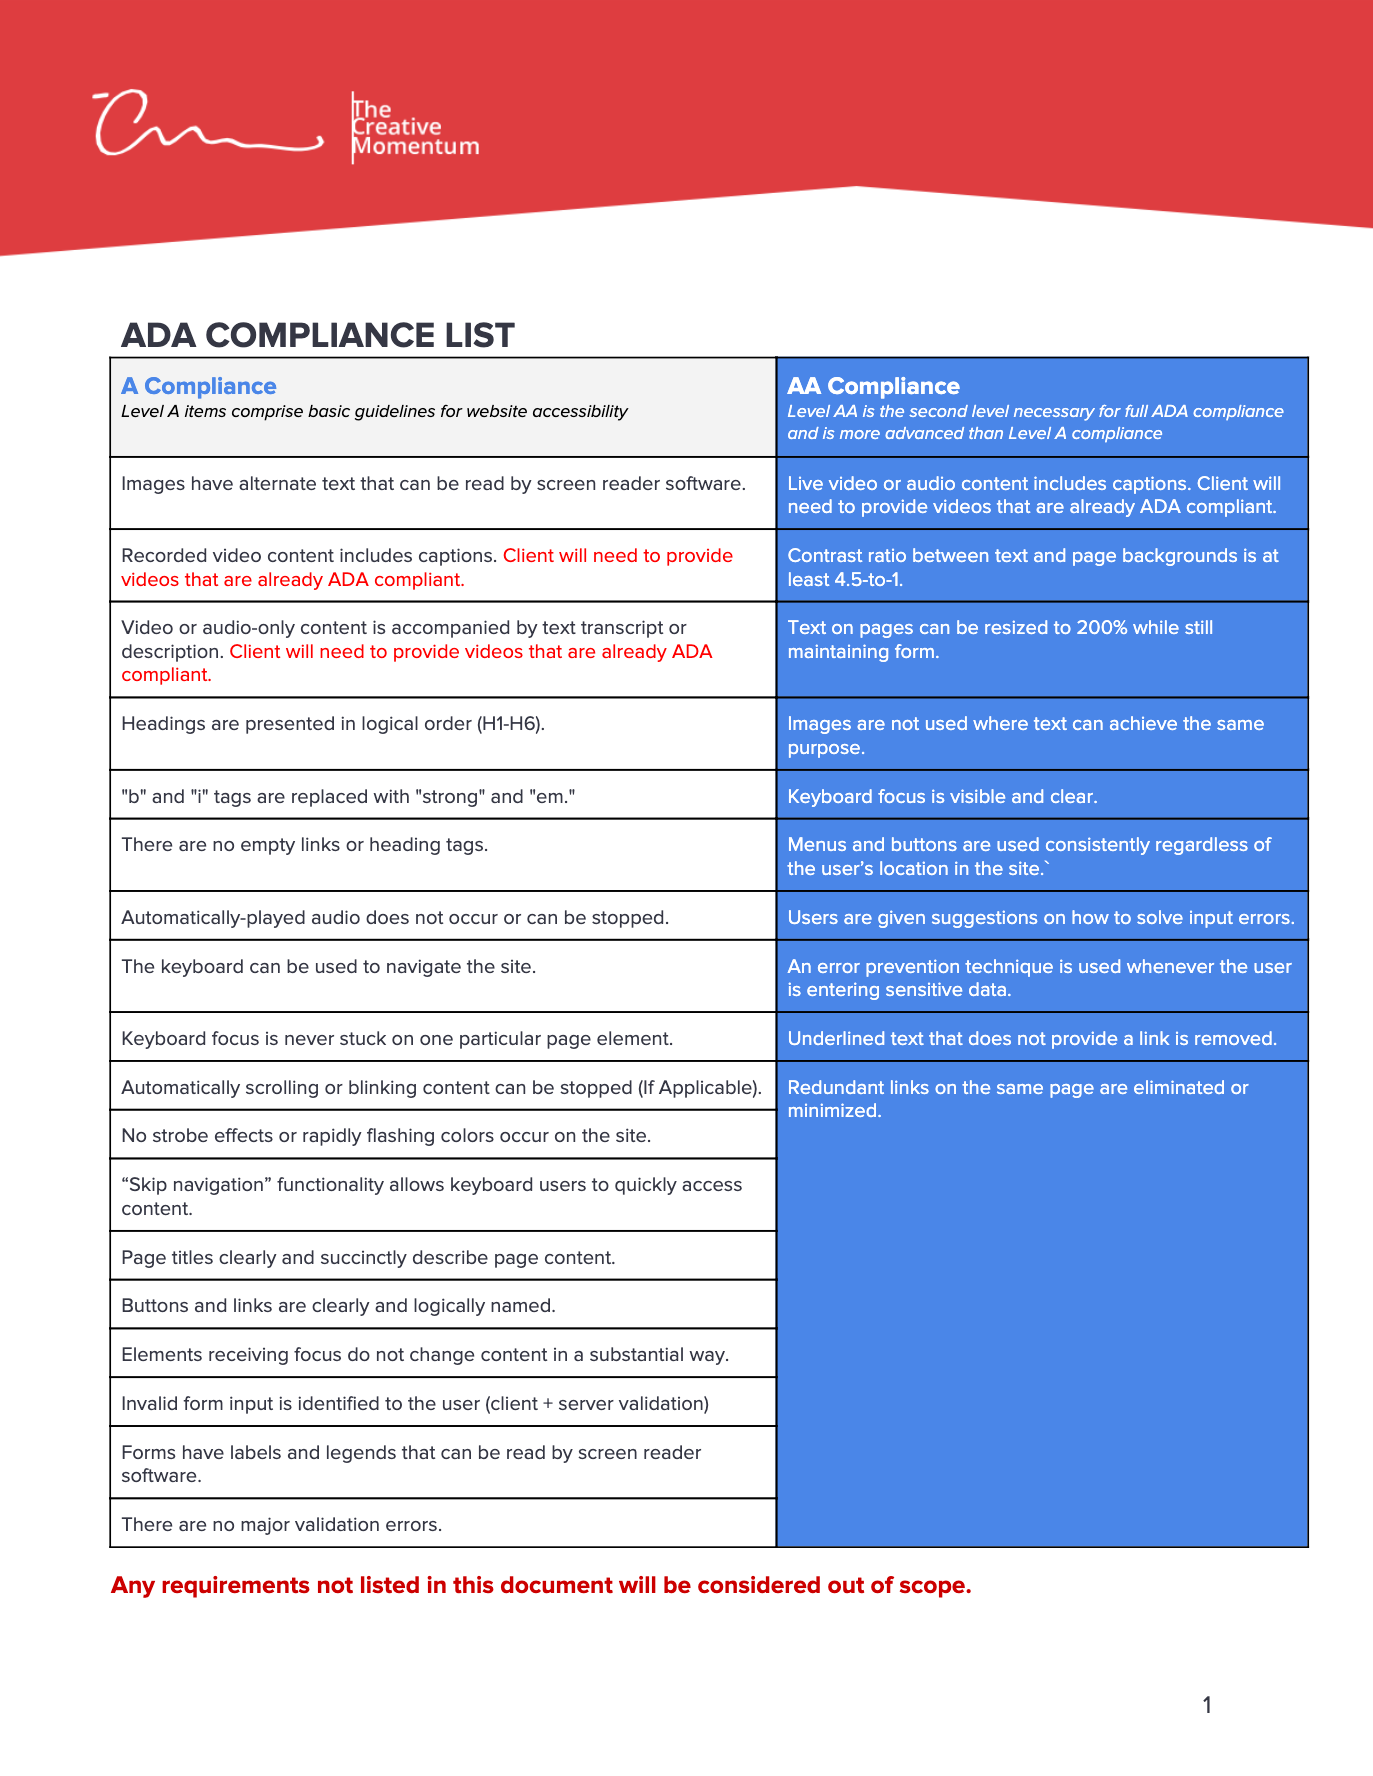 ADA Website Compliance checklist by the Creative Momentum